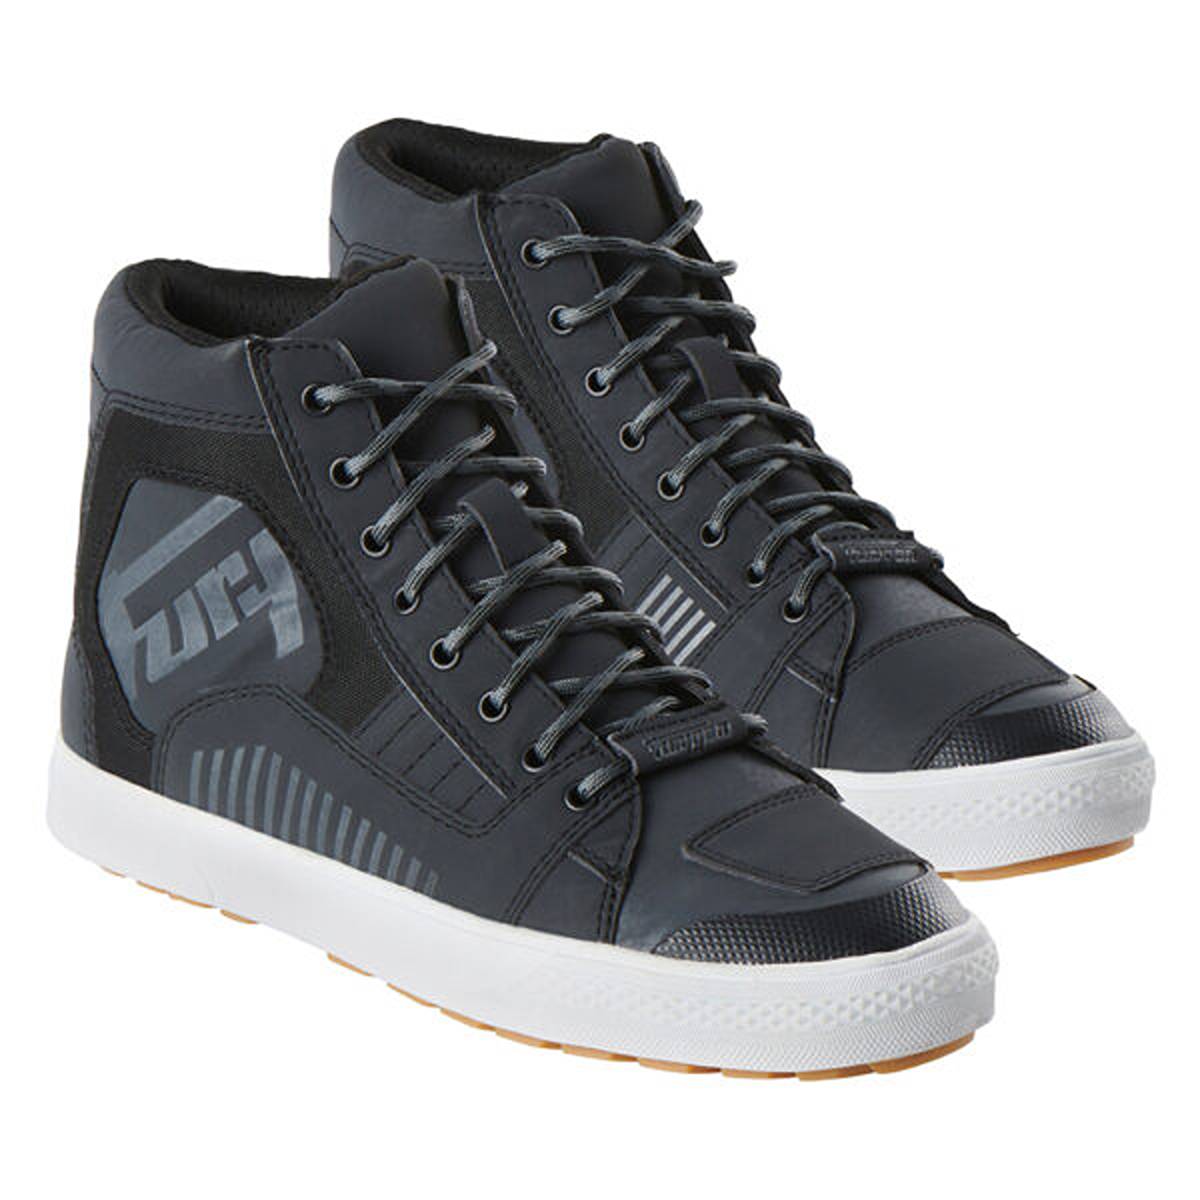 Image of Furygan Sacramento D30 Shoes Black Size 44 ID 3435980368296